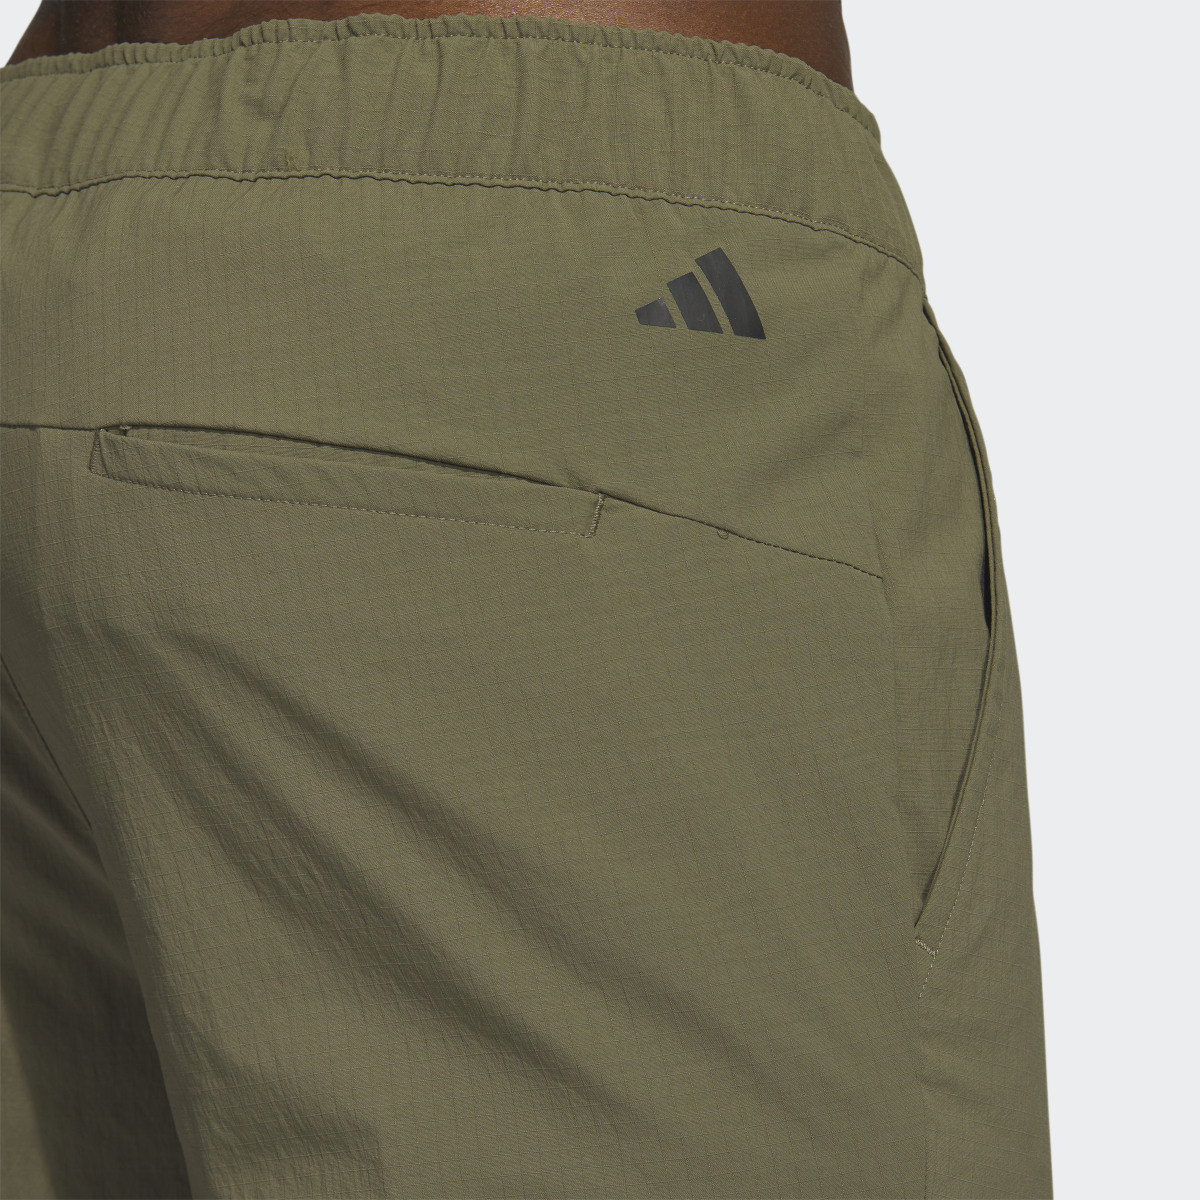 Adidas Ripstop Golf Pants. 5